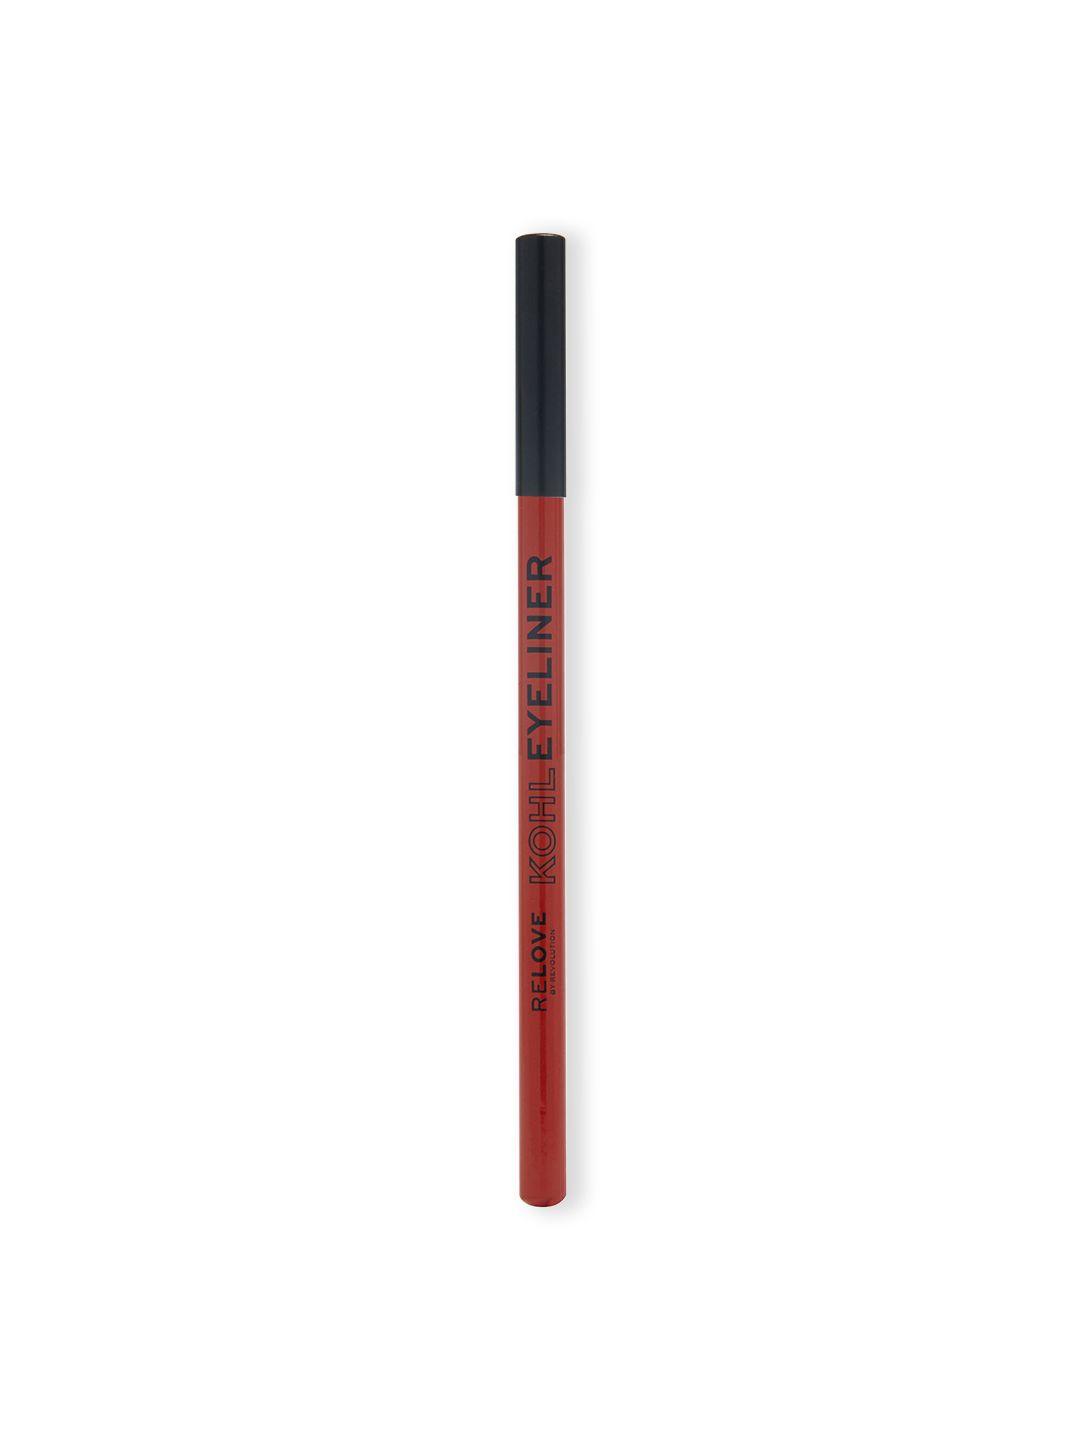 relove highly pigmented matte finish kohl eyeliner pencil 1.2 g - orange